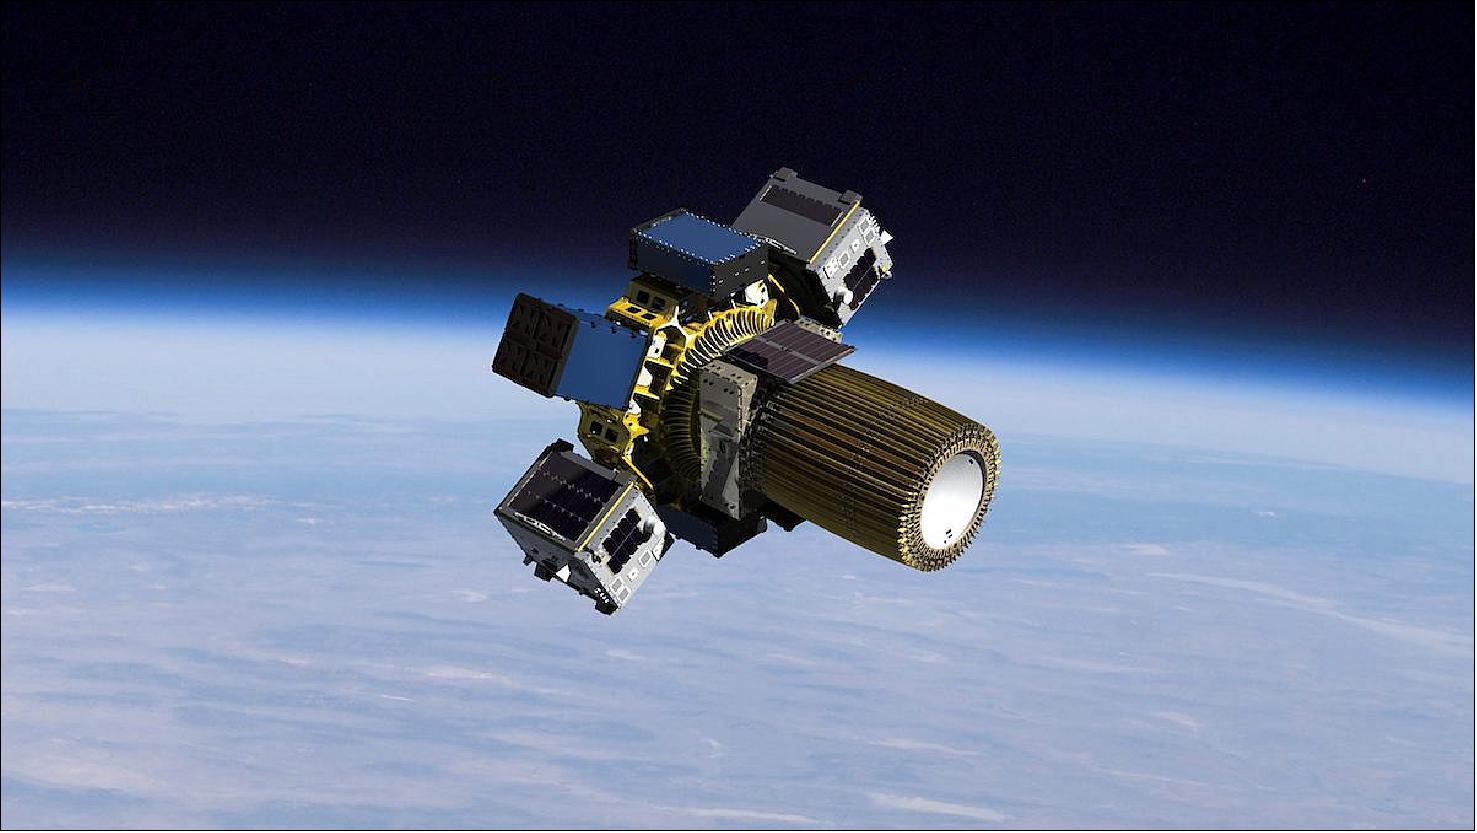 Figure 5: Artist's concept of Spaceflight's Sherpa orbital transportation vehicle (image credit: Spaceflight)